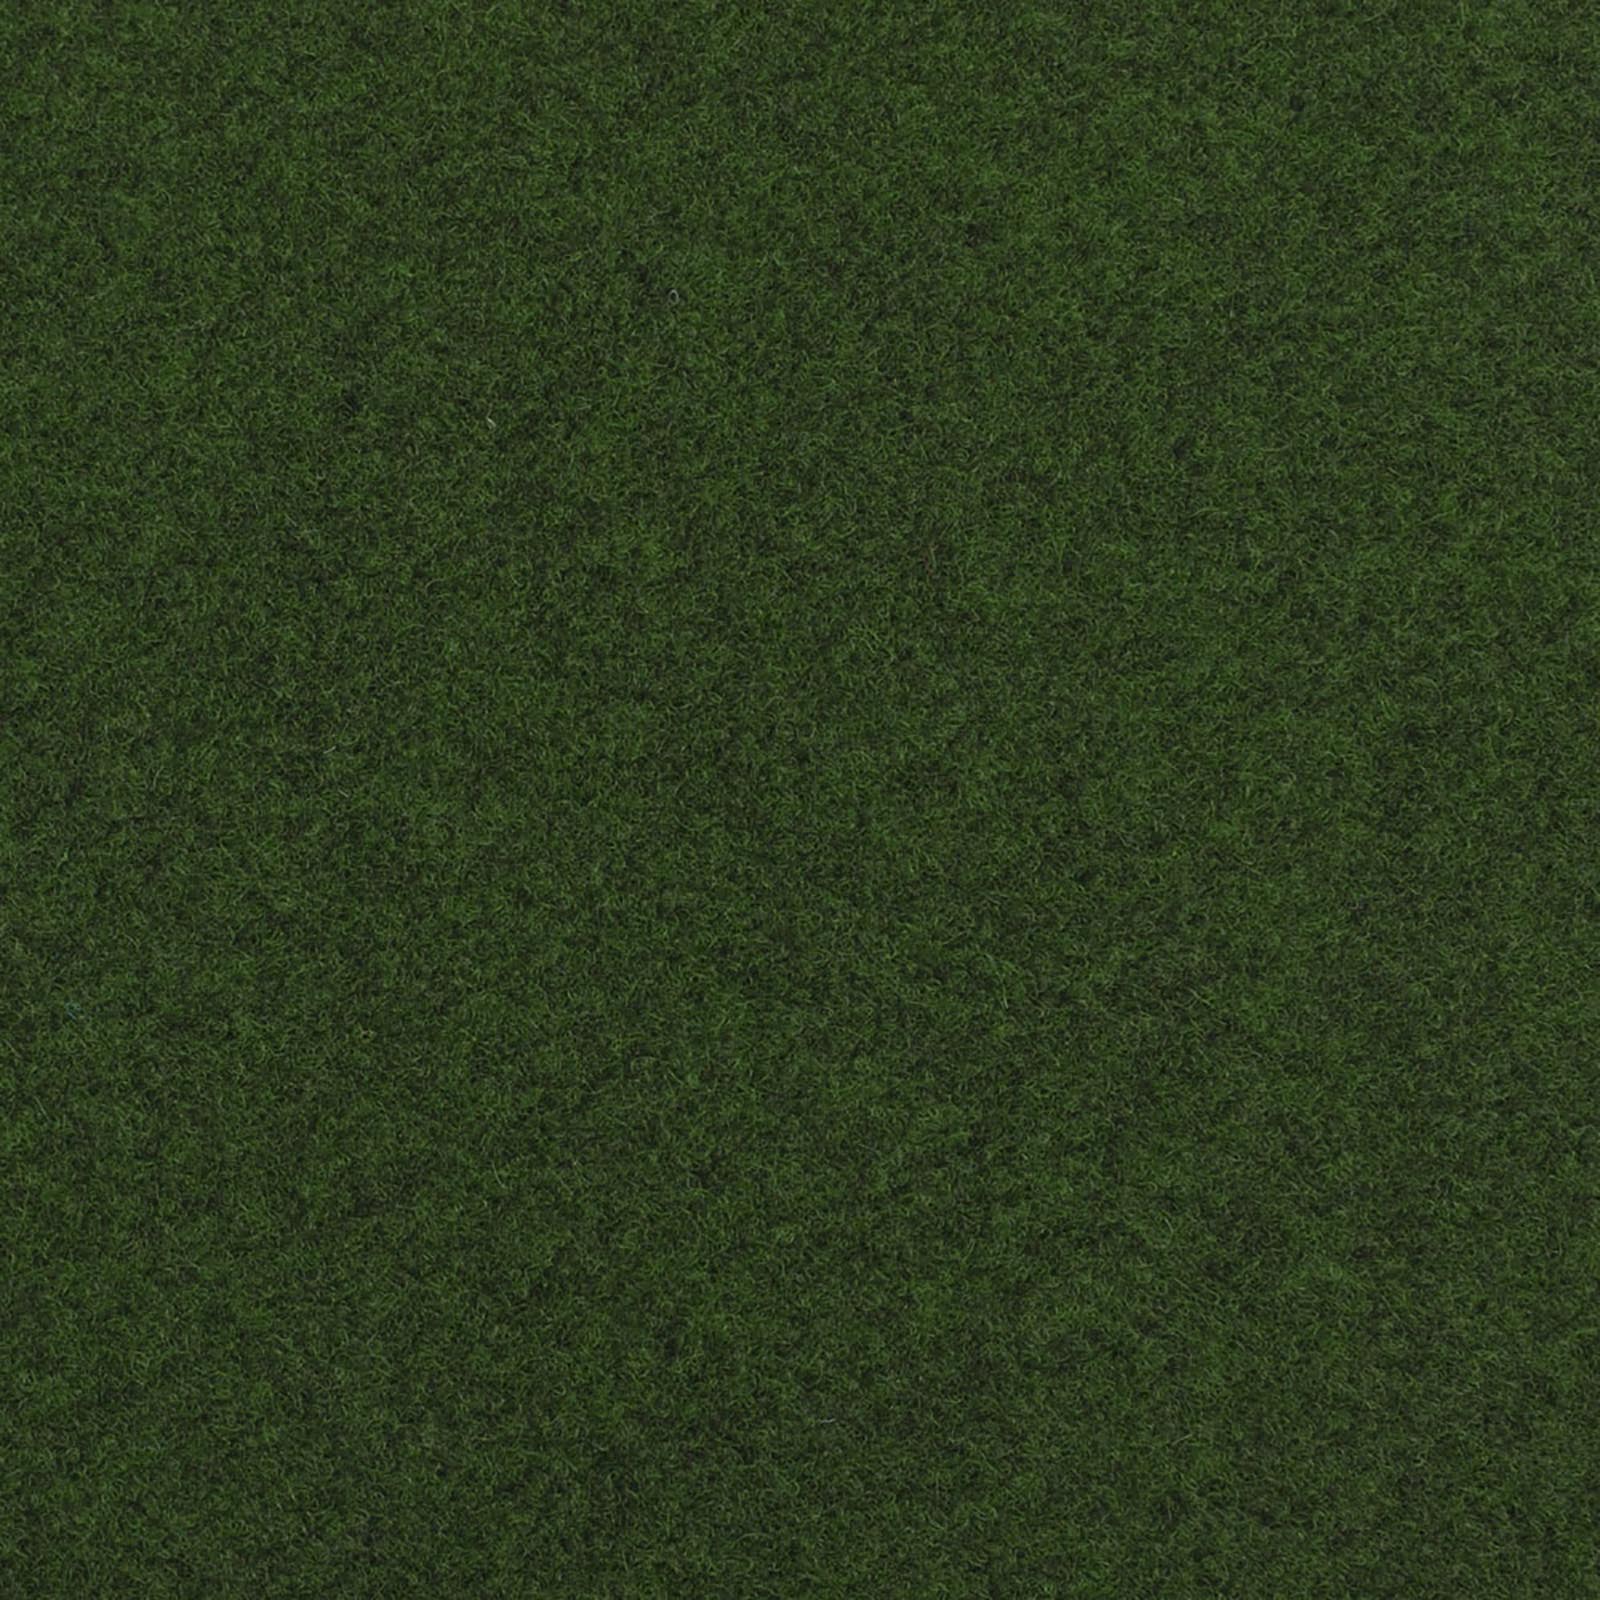 Dark Green Outdoor Carpet - Far